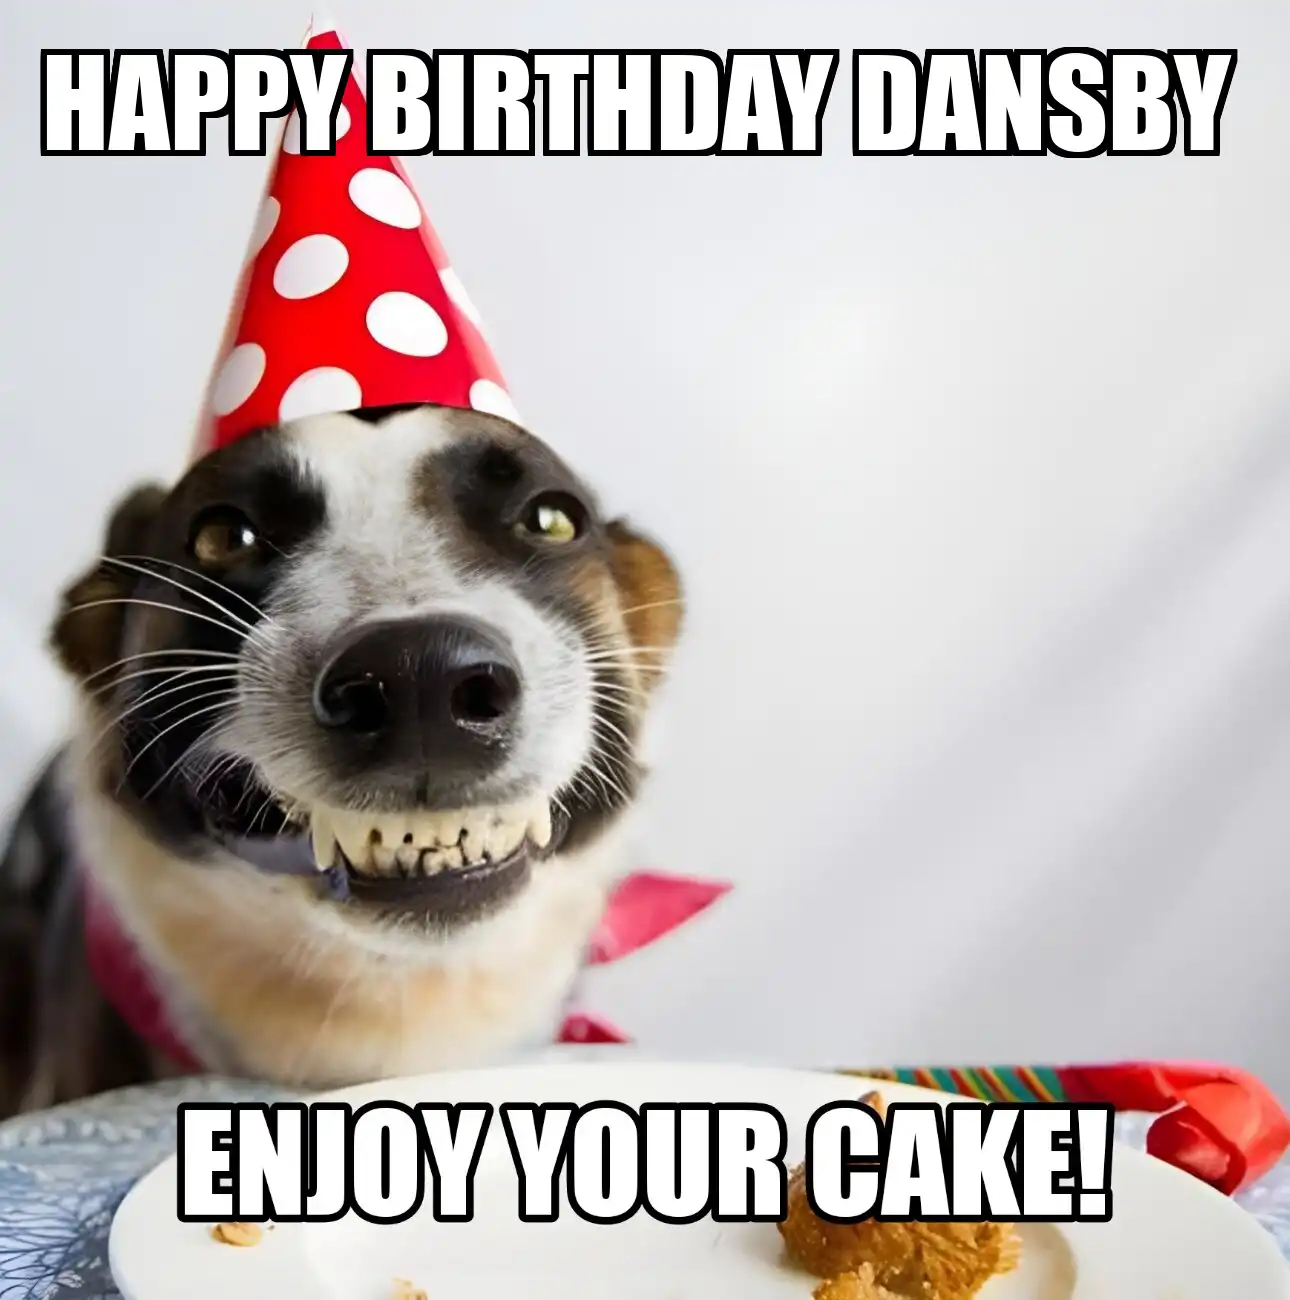 Happy Birthday Dansby Enjoy Your Cake Dog Meme